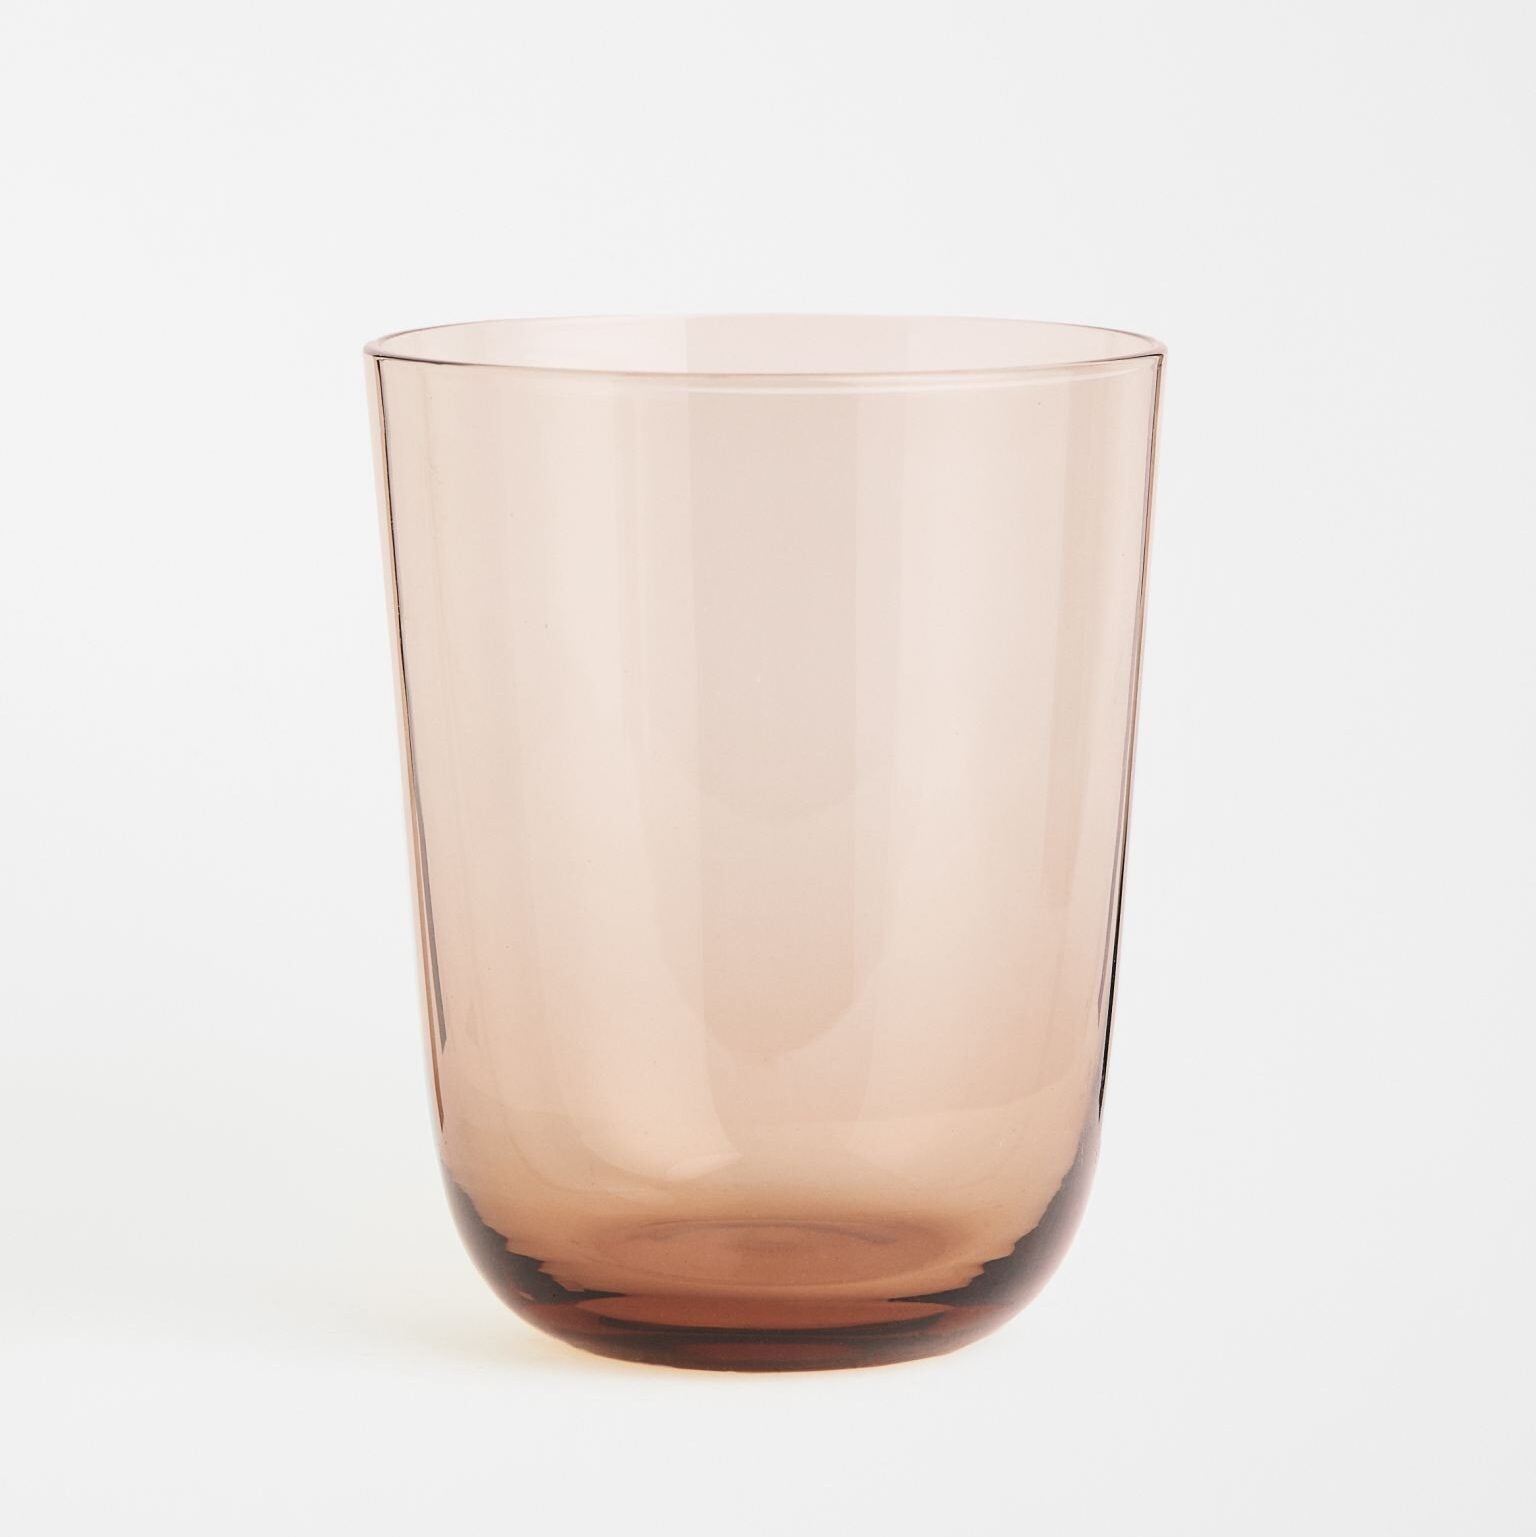 Beige beverage glass against a white background.